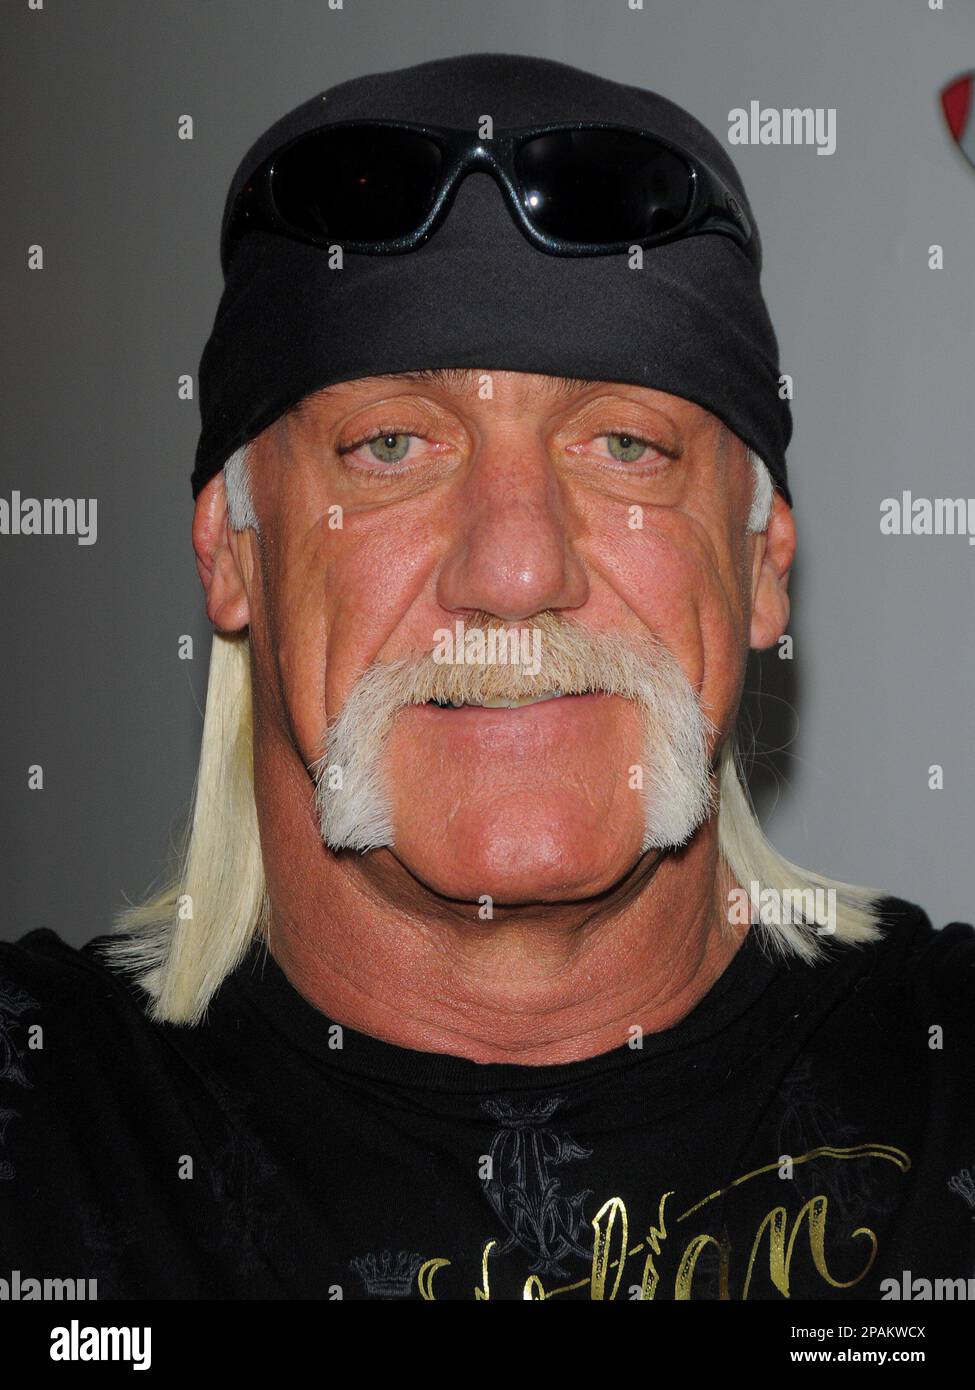 Wrestler Hulk Hogan, also known as Terry Bollea, makes an appearance at ...